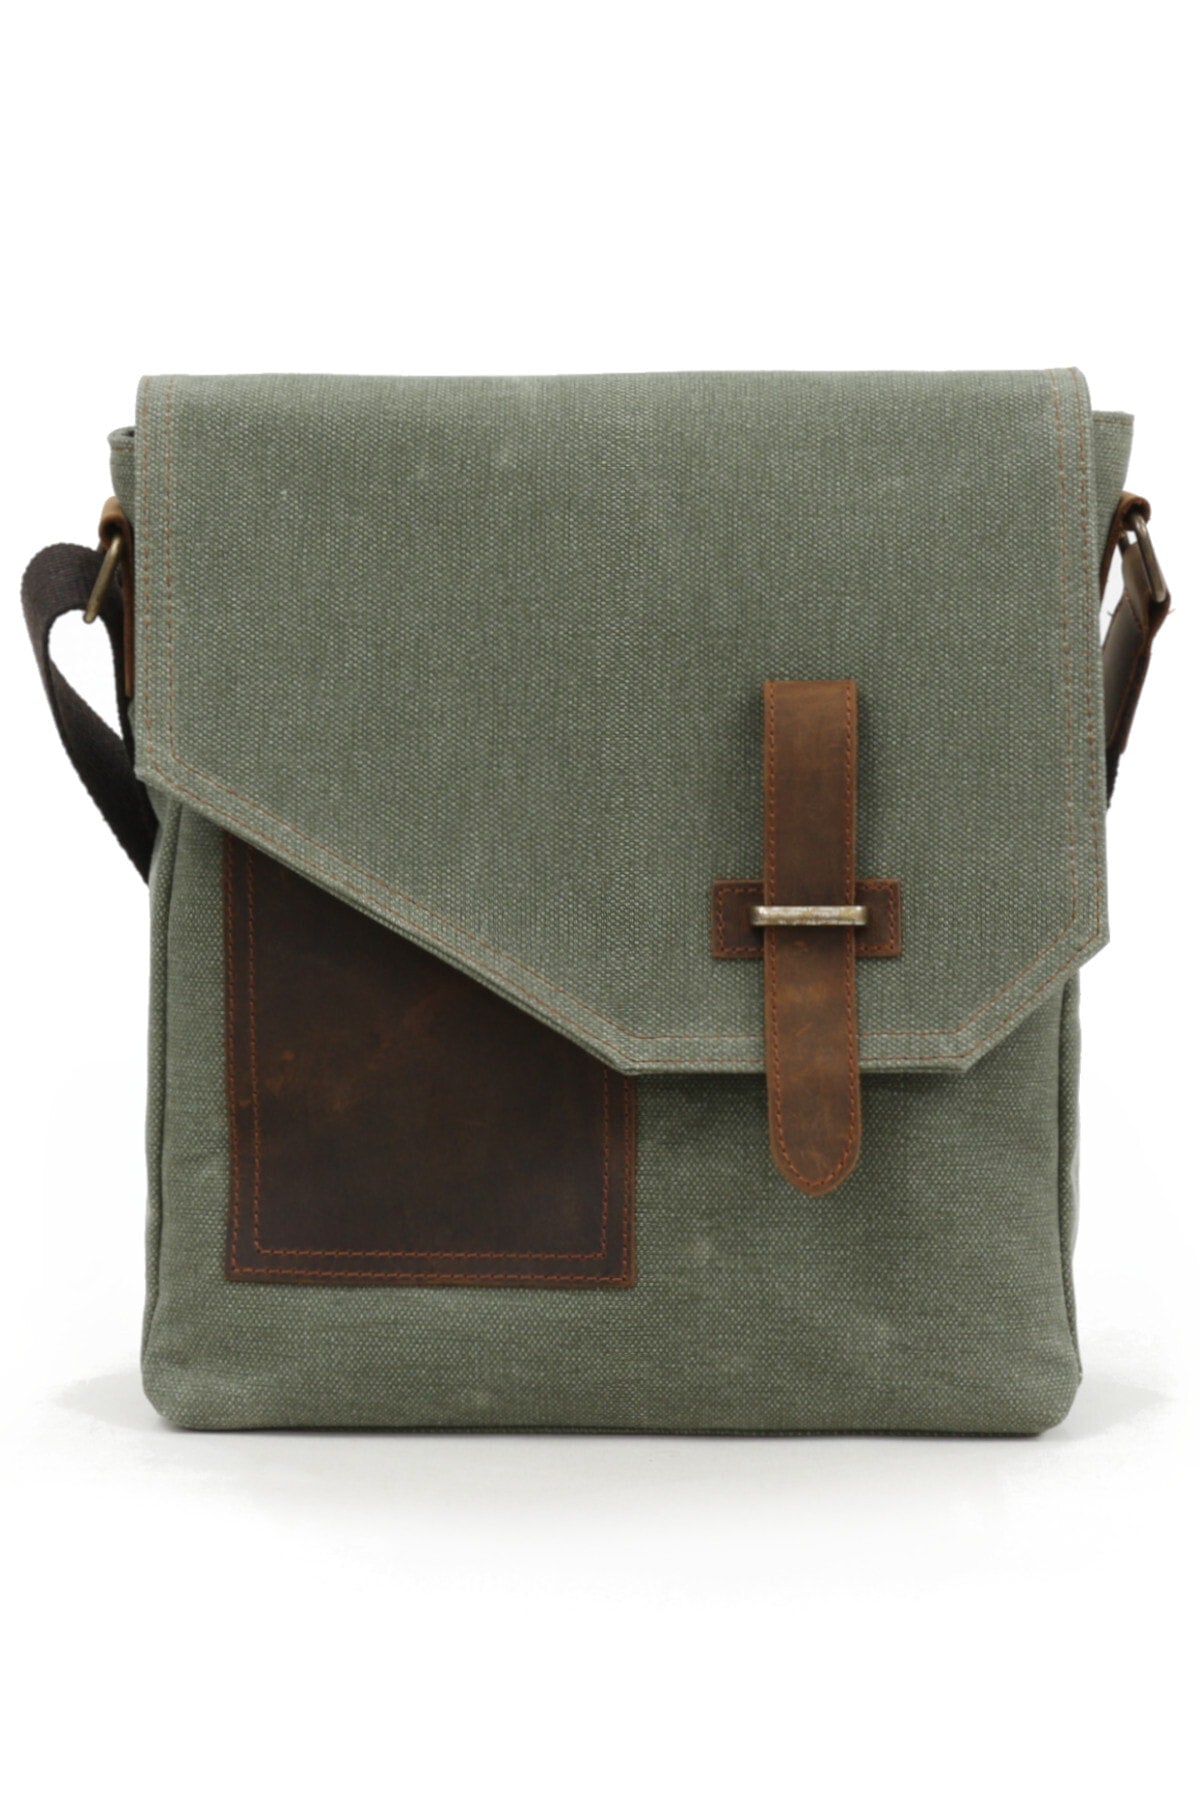 Cappadocia Genuine Leather 4035 Teos Waterproof Khaki Green Postman Shoulder Waxed Canvas Laptop Bag